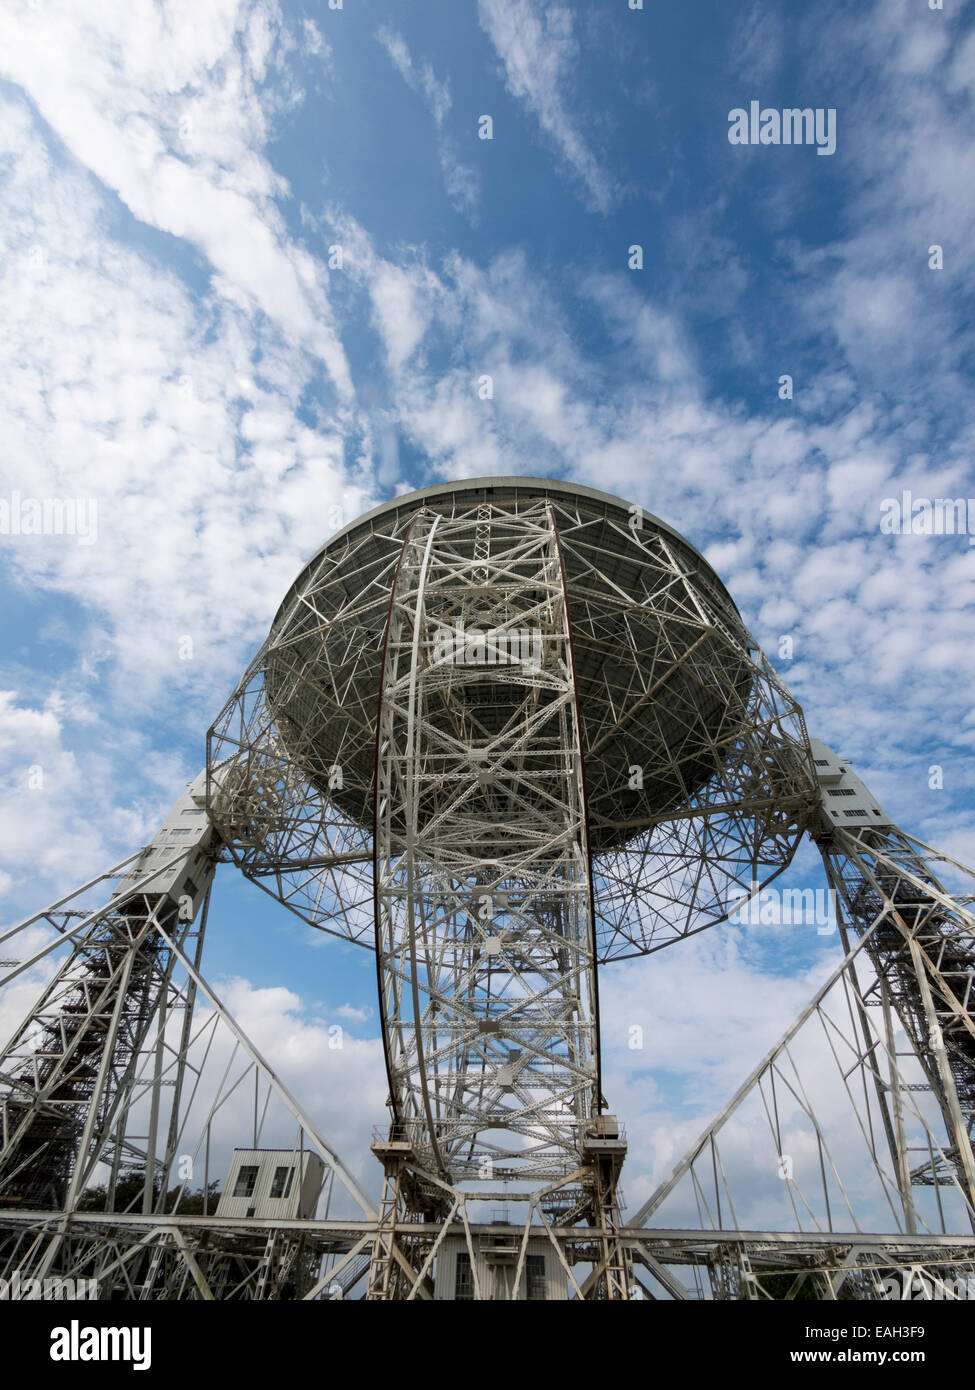 Lovell Telescope at Jodrell Bank Observatory,Cheshire, UK Stock Photo